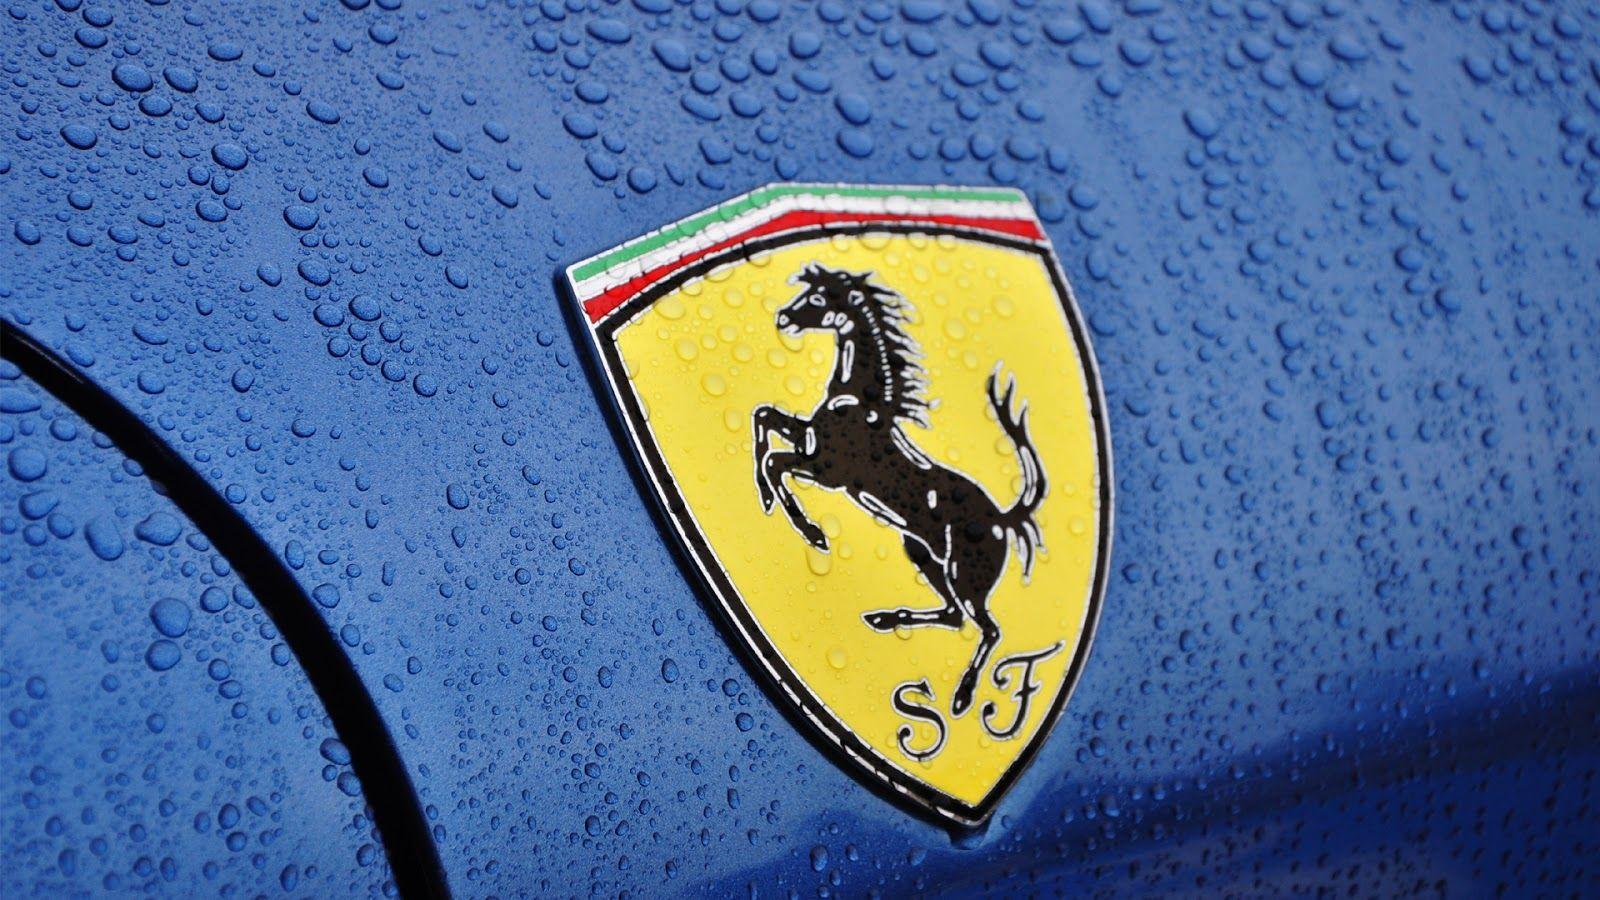 Ferrari Car Logo Wallpaper Picture 58912 1600x900 px